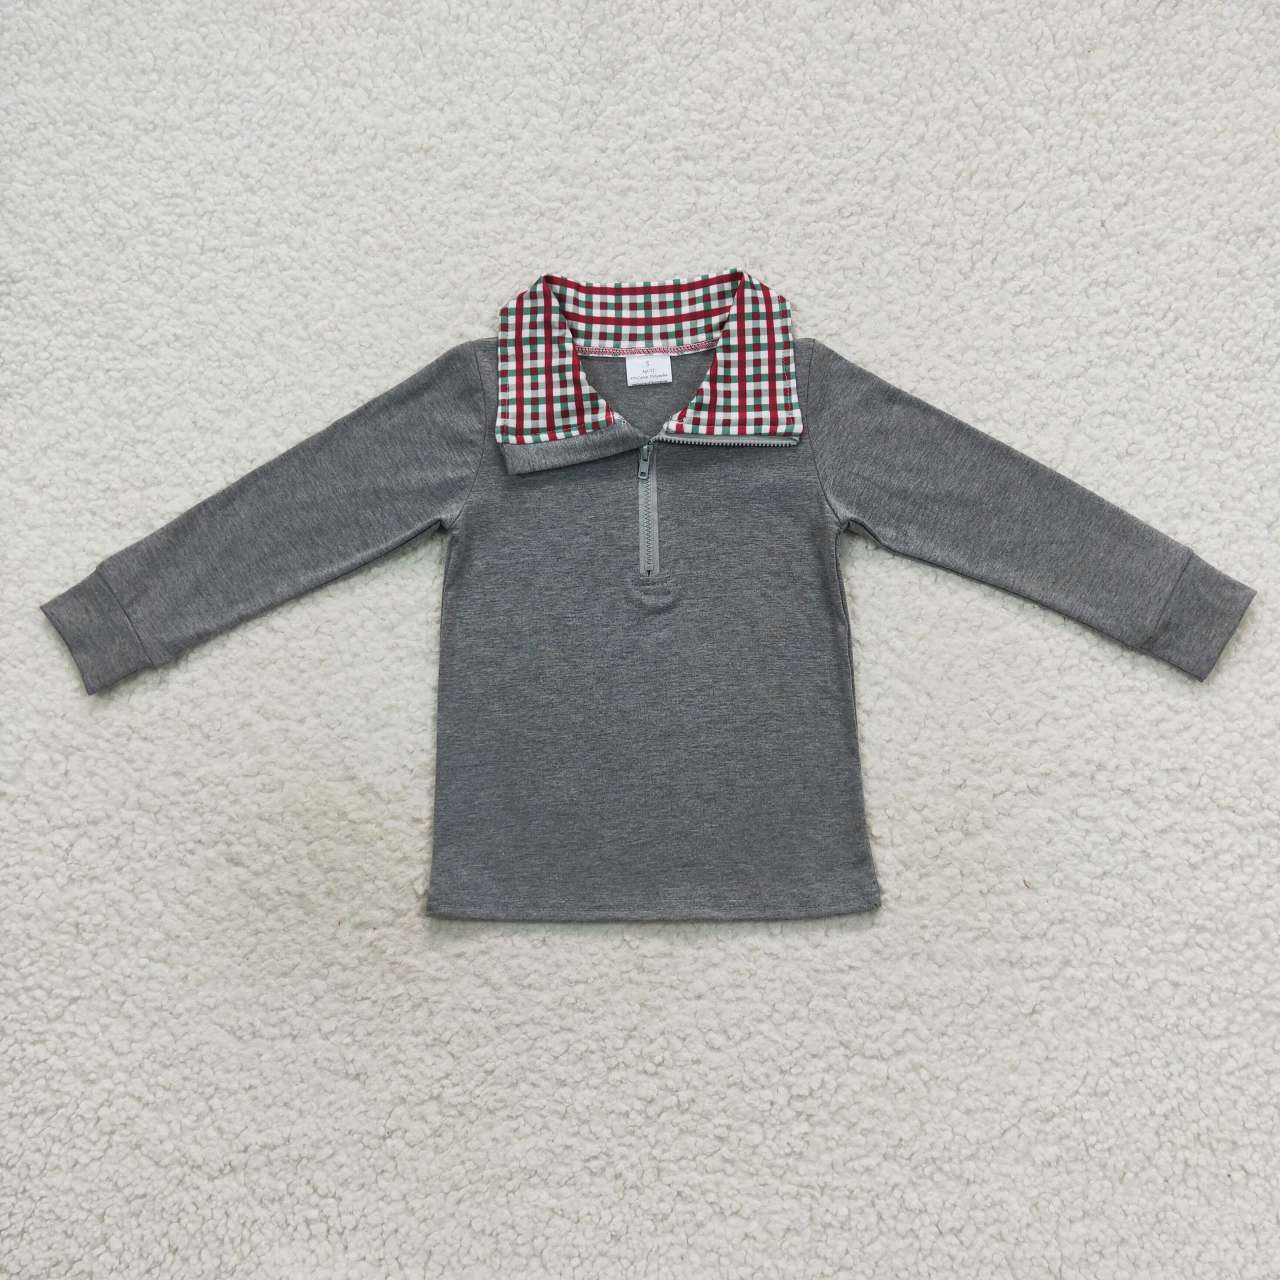 BT0283 toddler boy clothes boy winter top 1